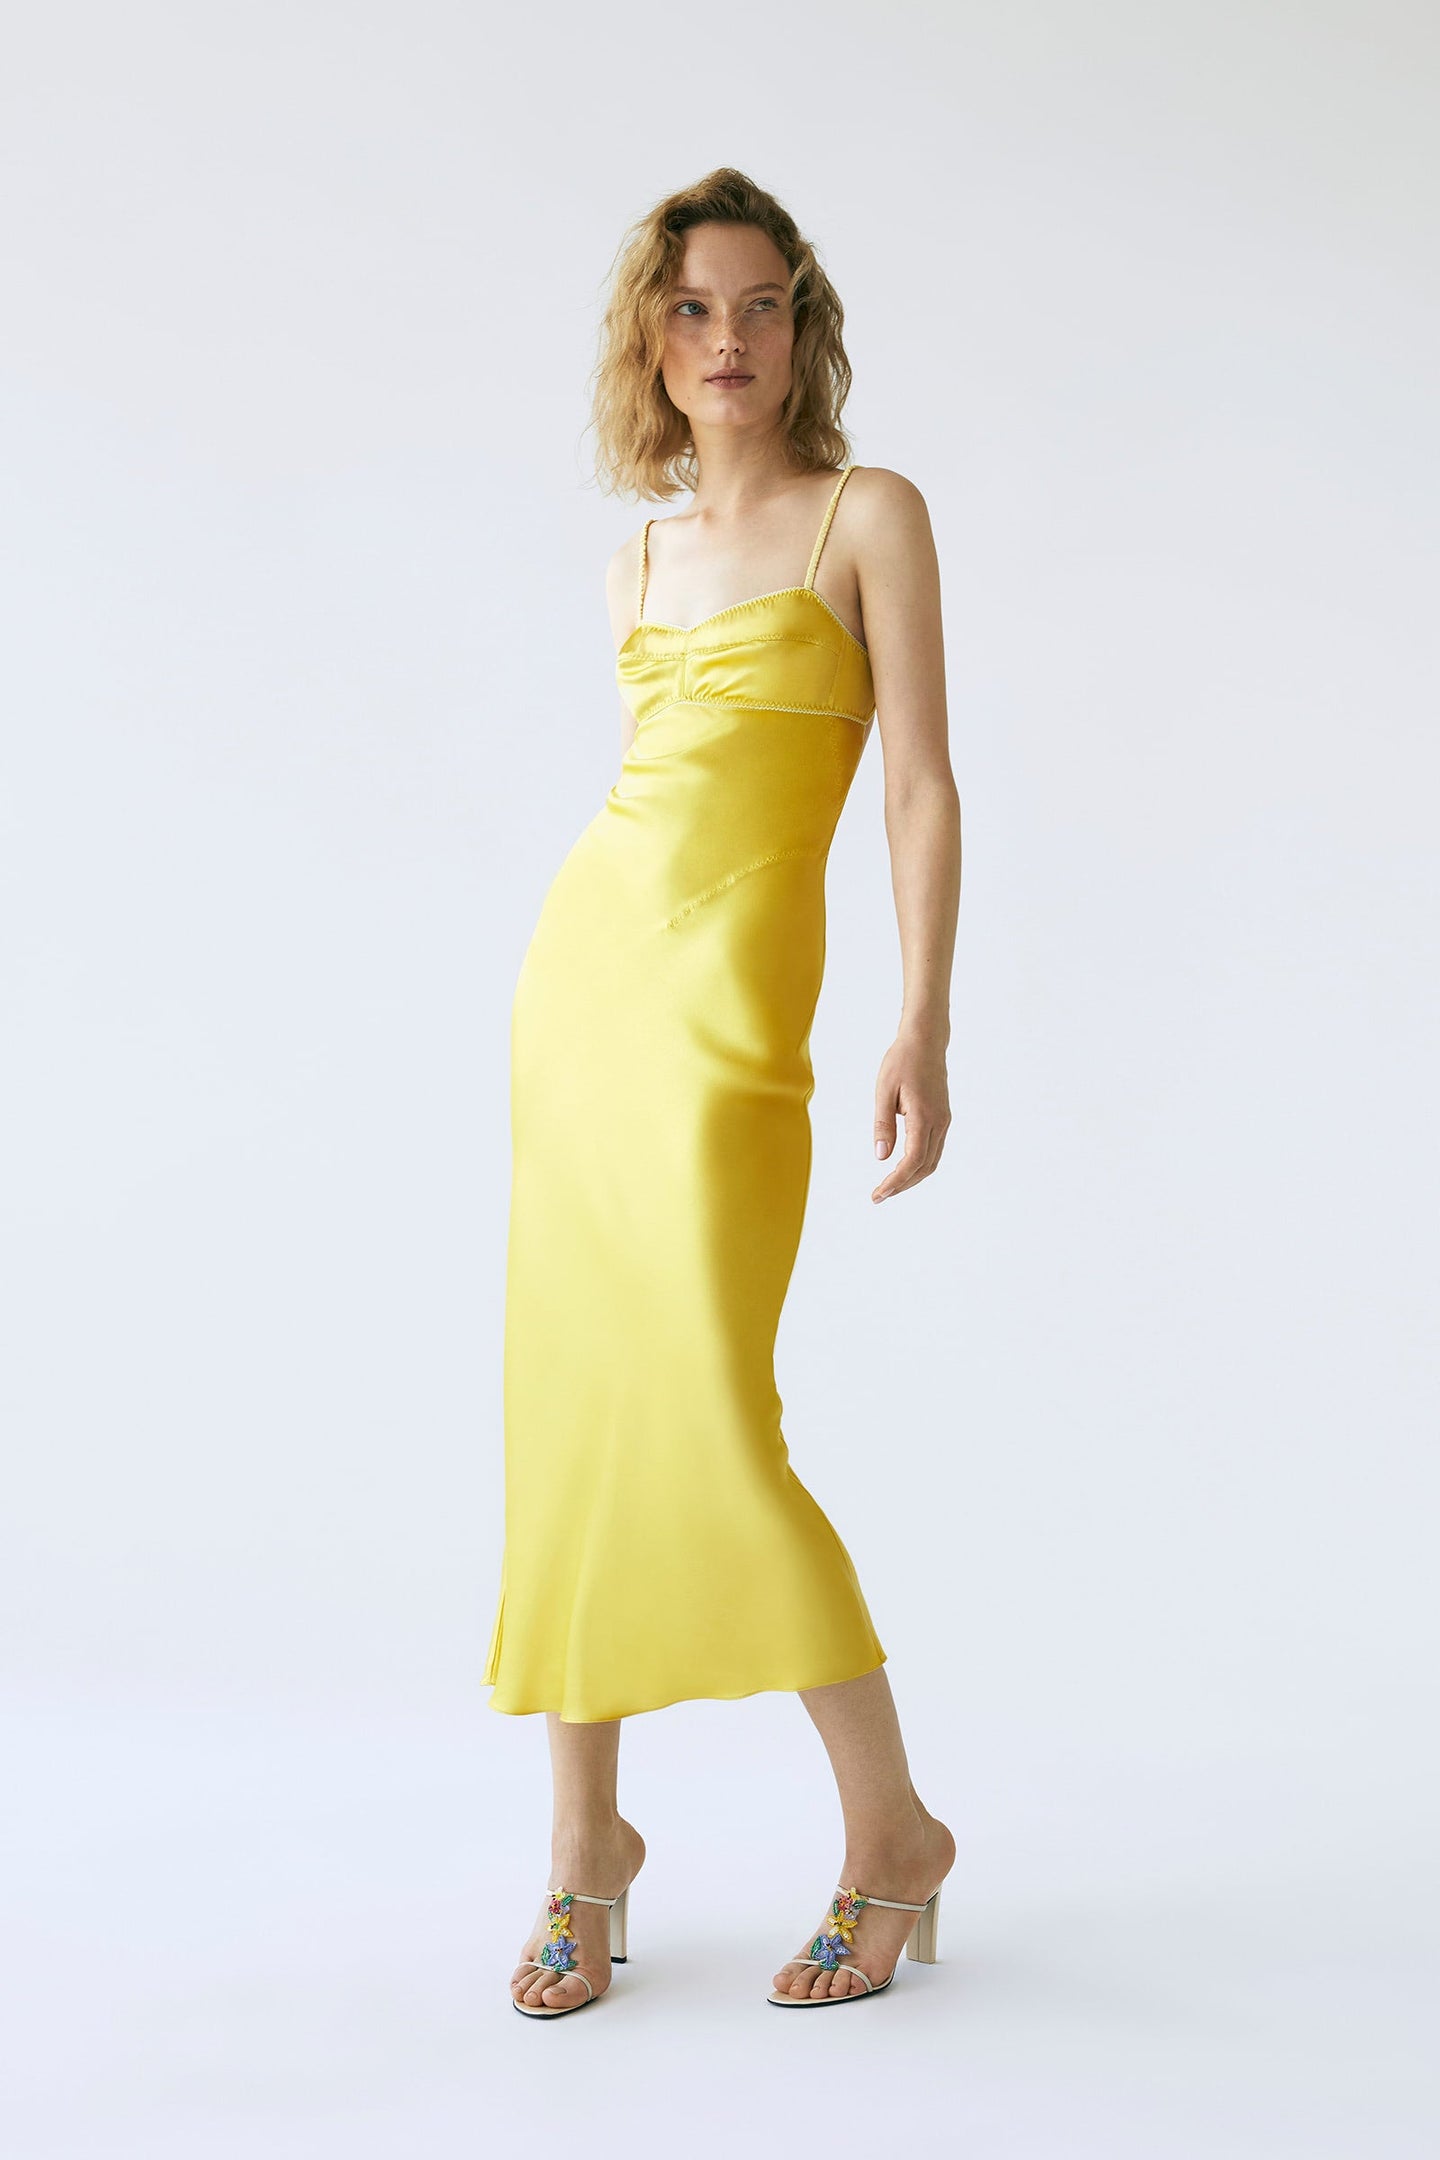 Model in yellow Waterlily dress